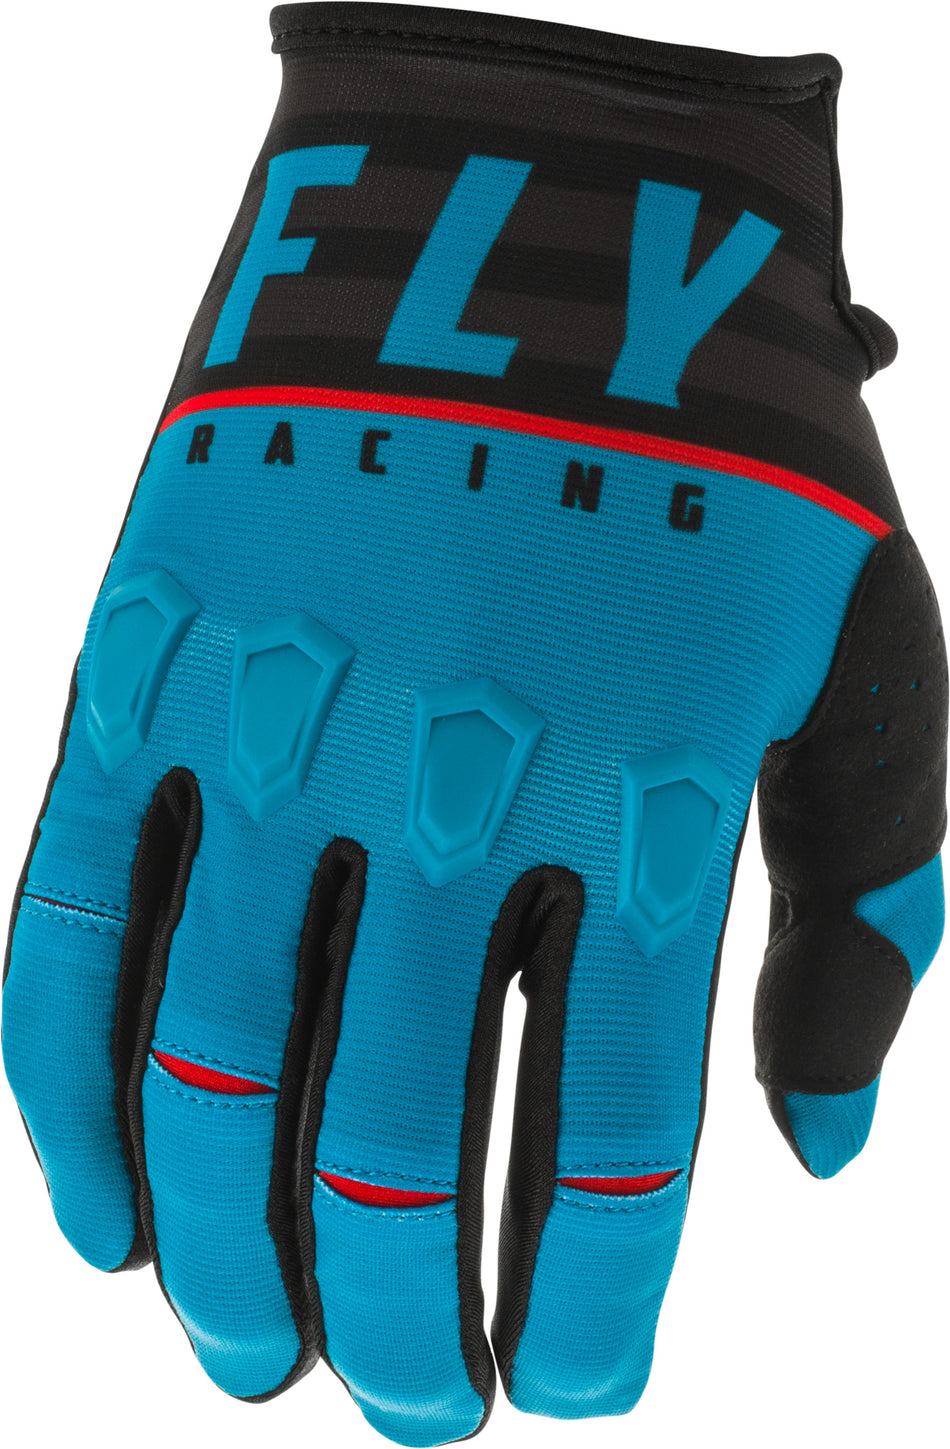 FLY RACING Kinetic K120 Gloves Blue/Black/Red Sz 09 373-41909